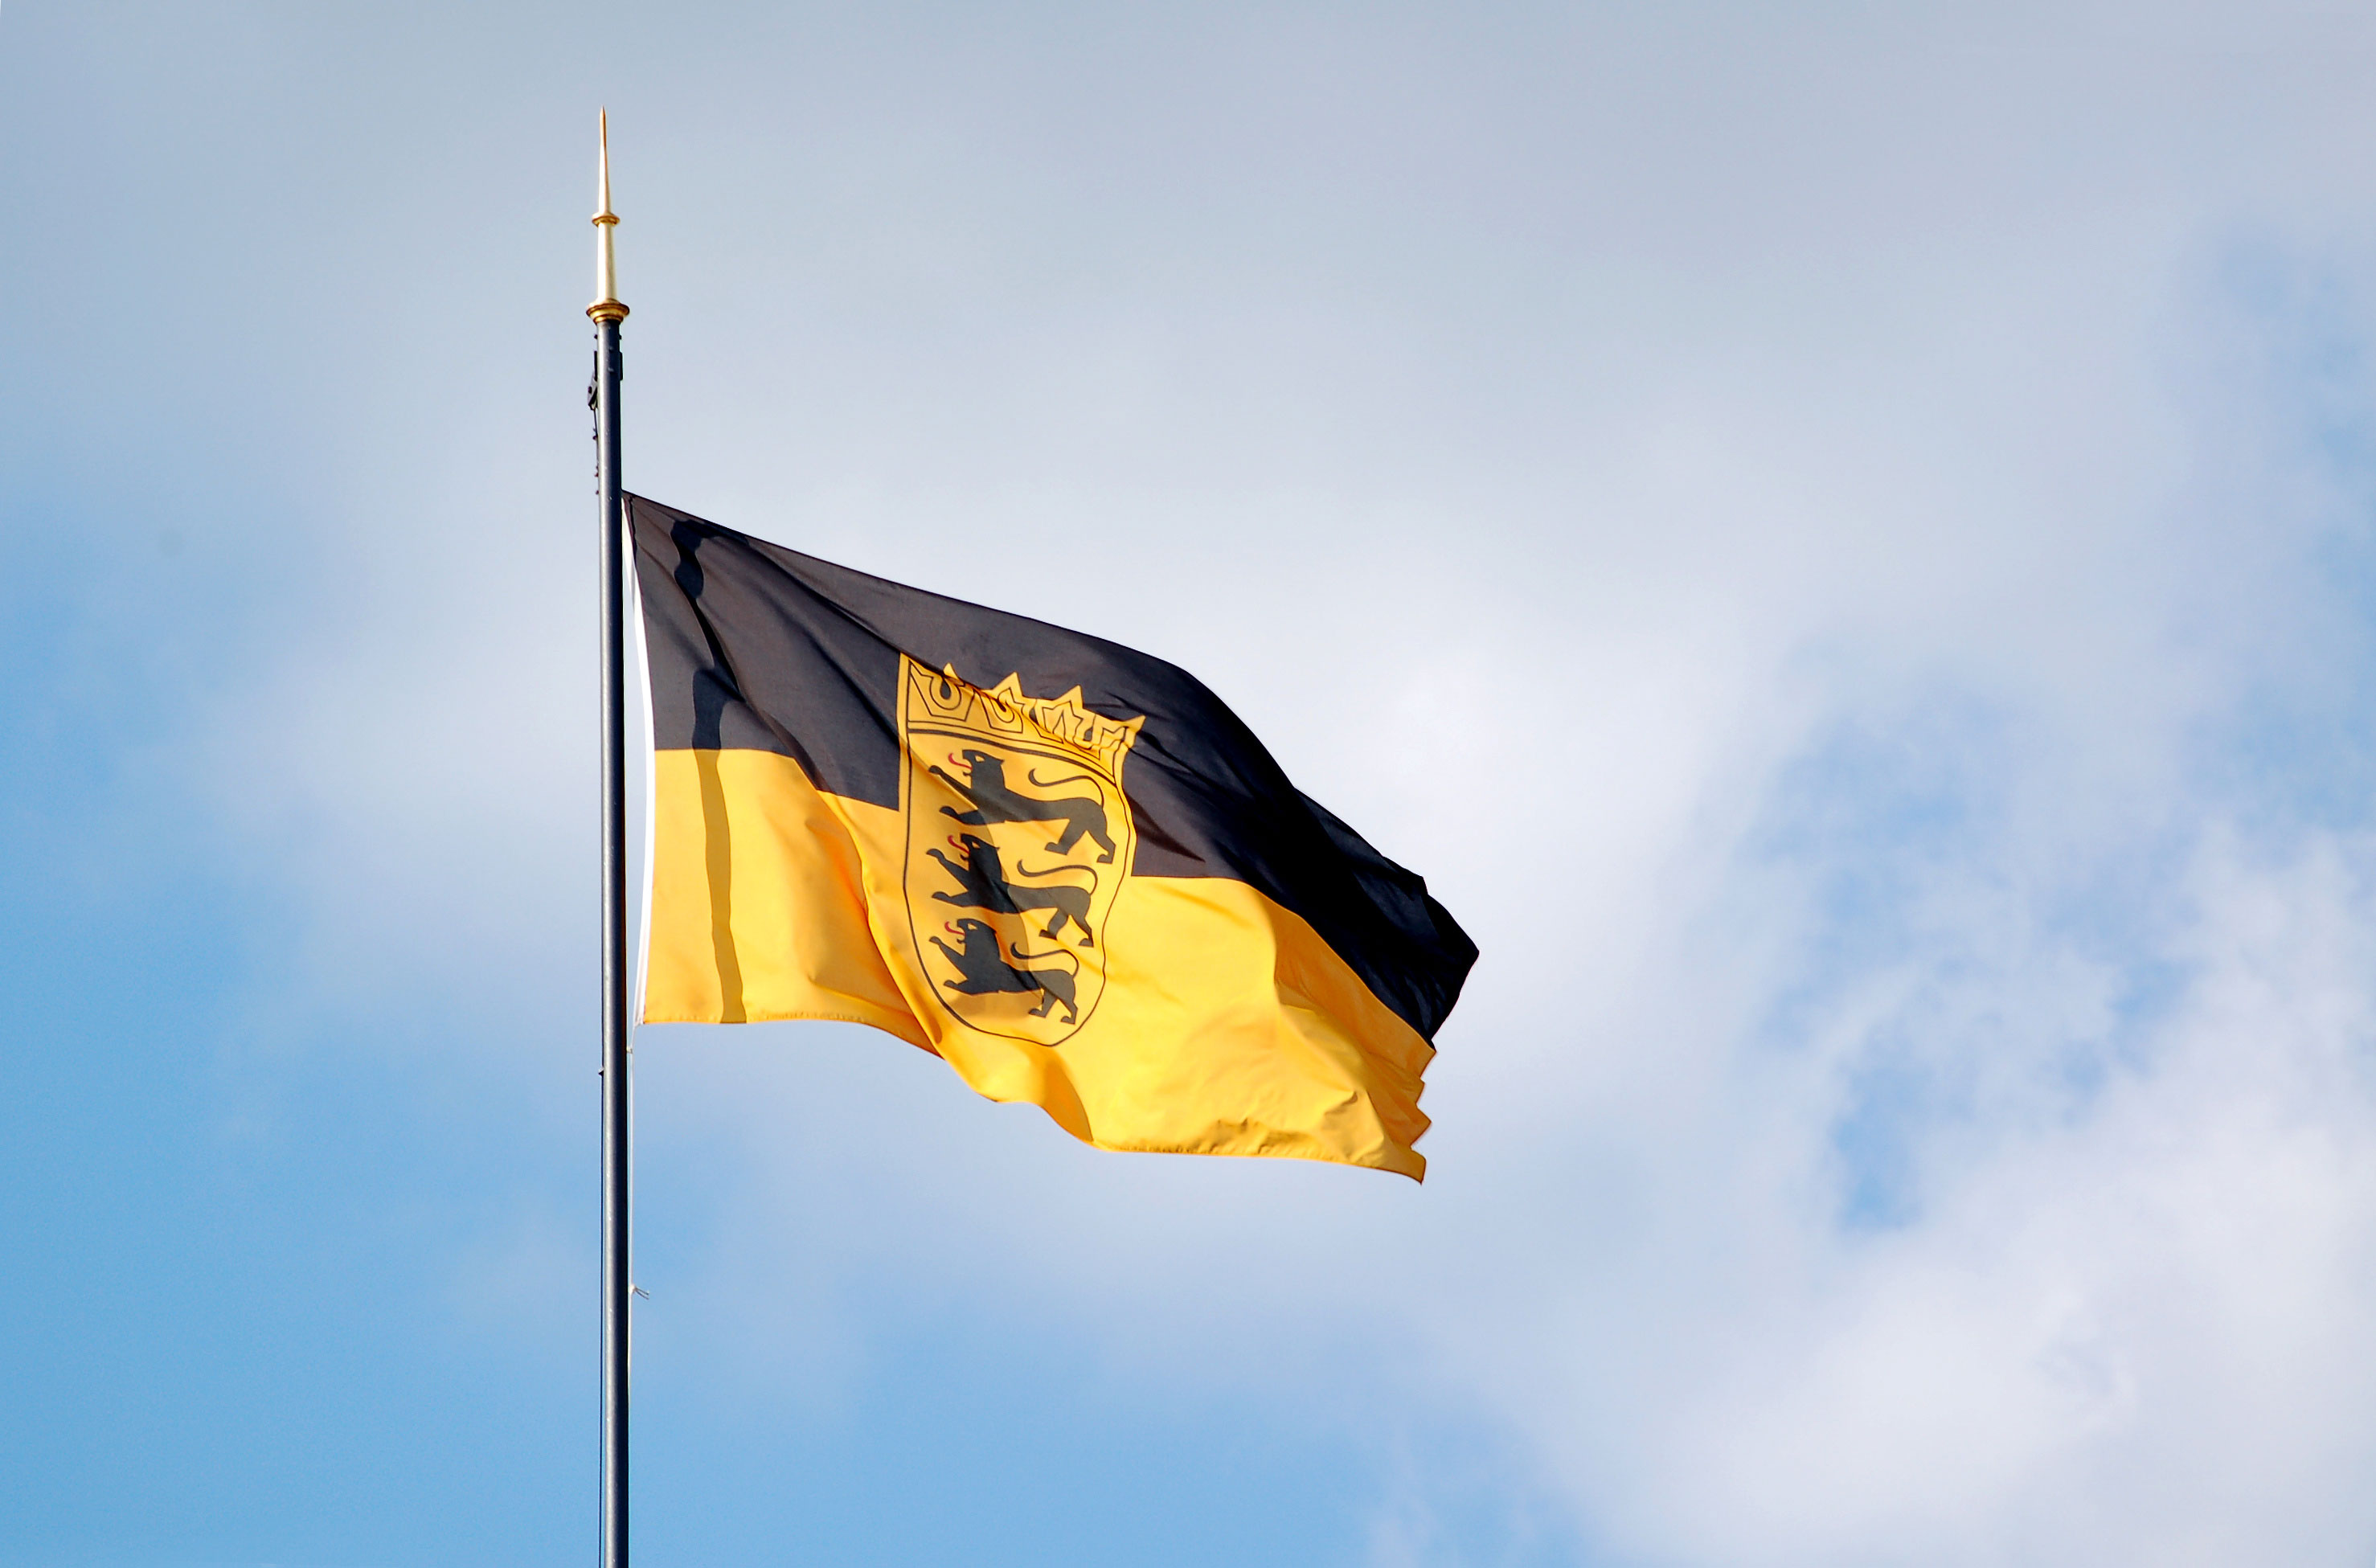 Baden-Württemberg Flagge